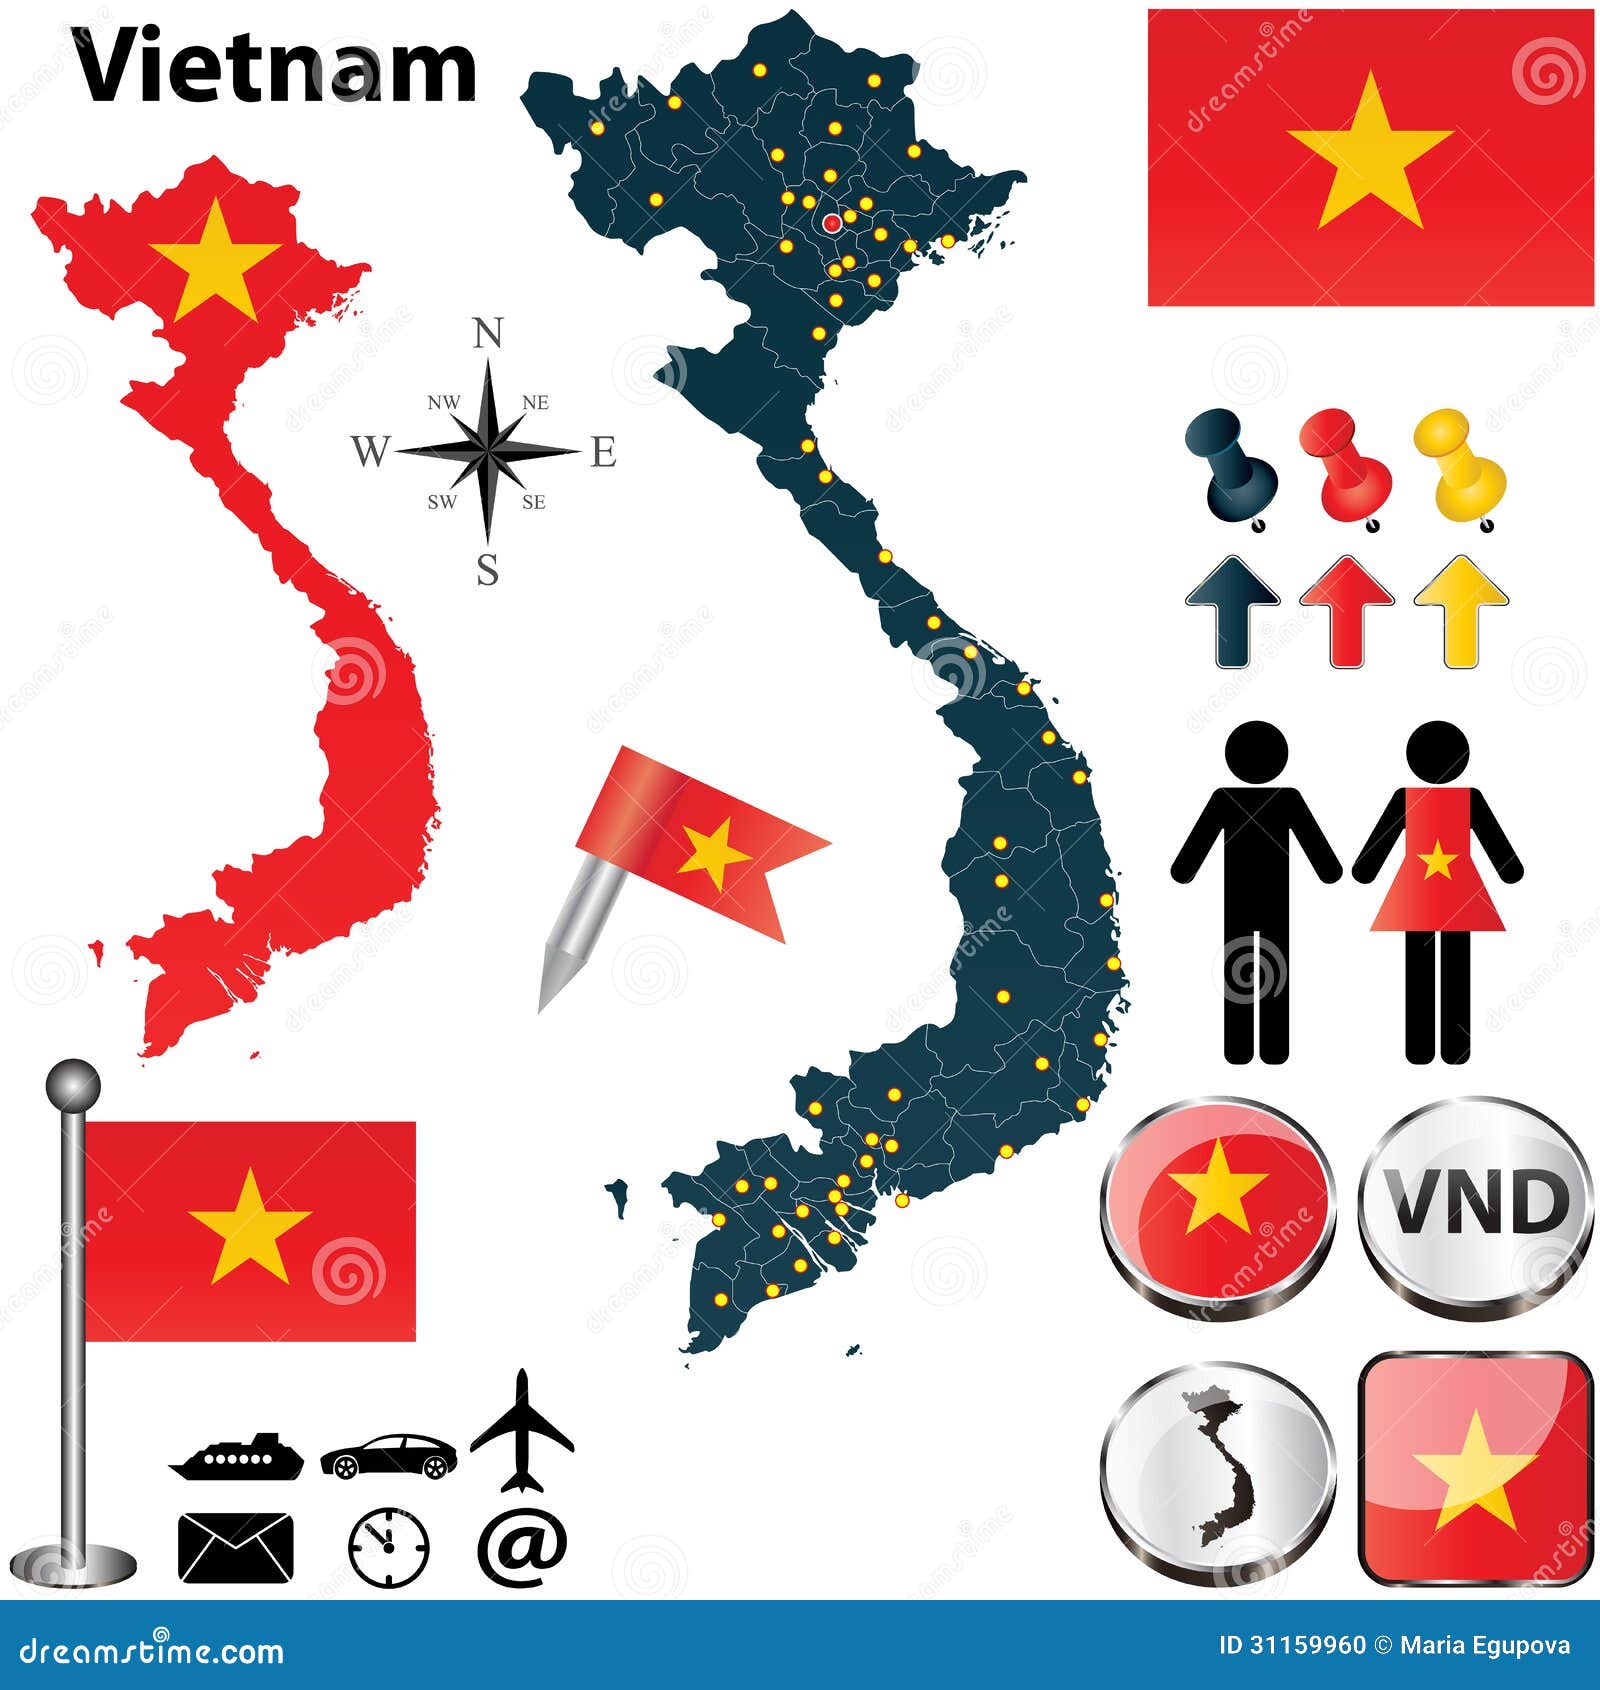 clipart map of vietnam - photo #17